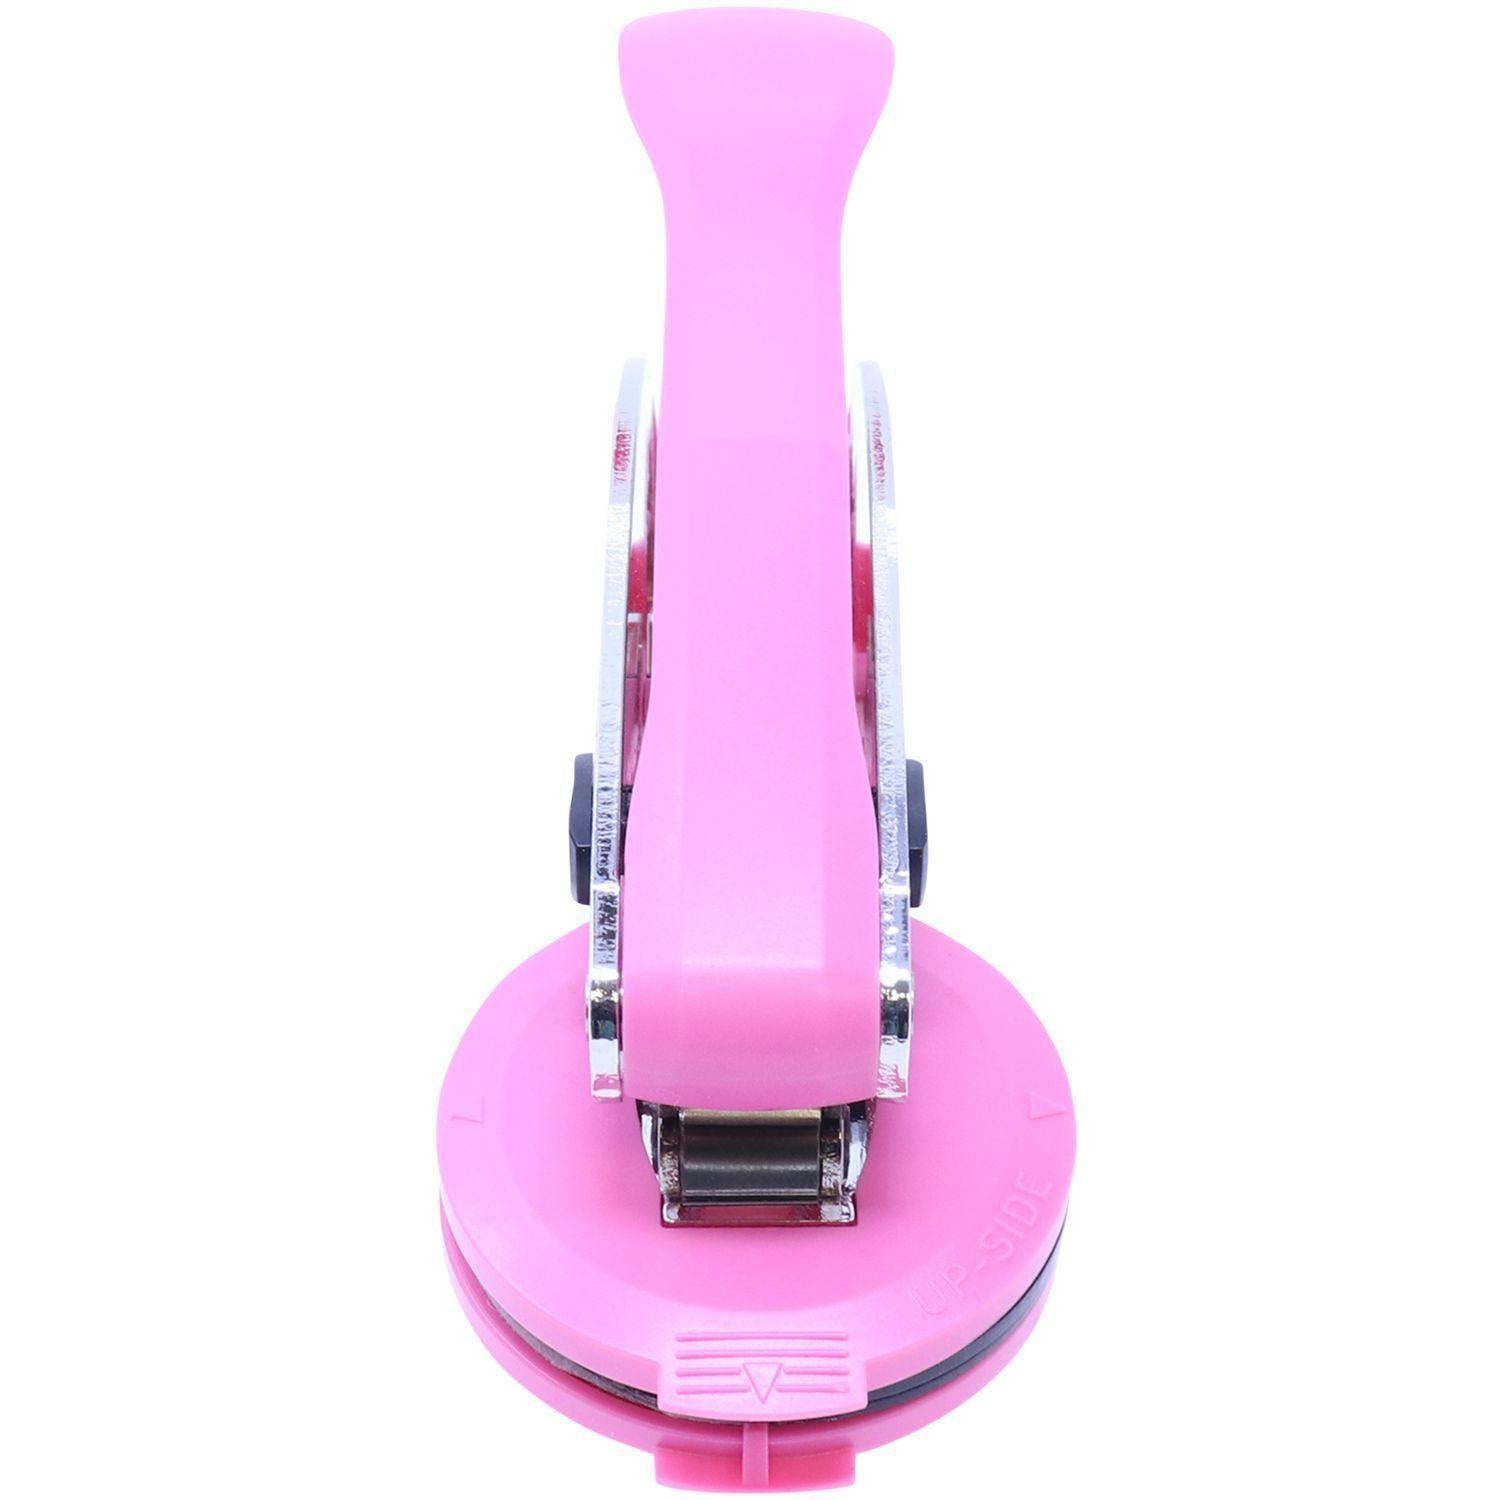 Forester Pink Hybrid Handheld Embosser - Engineer Seal Stamps - Embosser Type_Handheld, Embosser Type_Hybrid, Type of Use_Professional